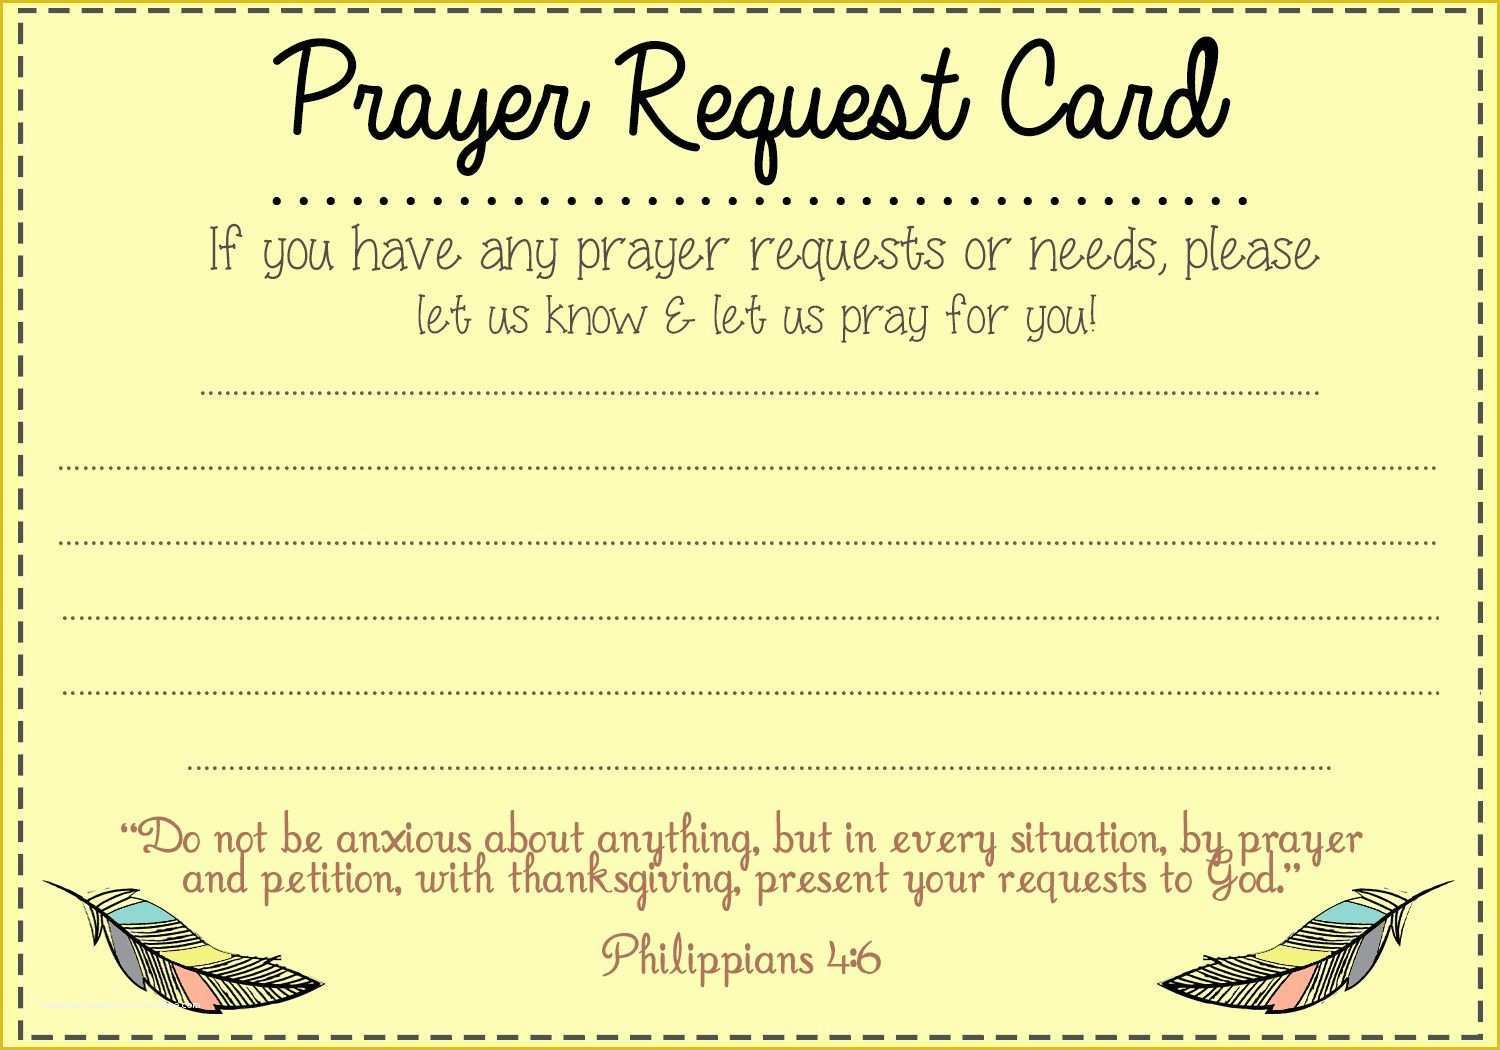 Free Prayer Card Template for Word Of Prayer Request Card Idea Mops Pinterest